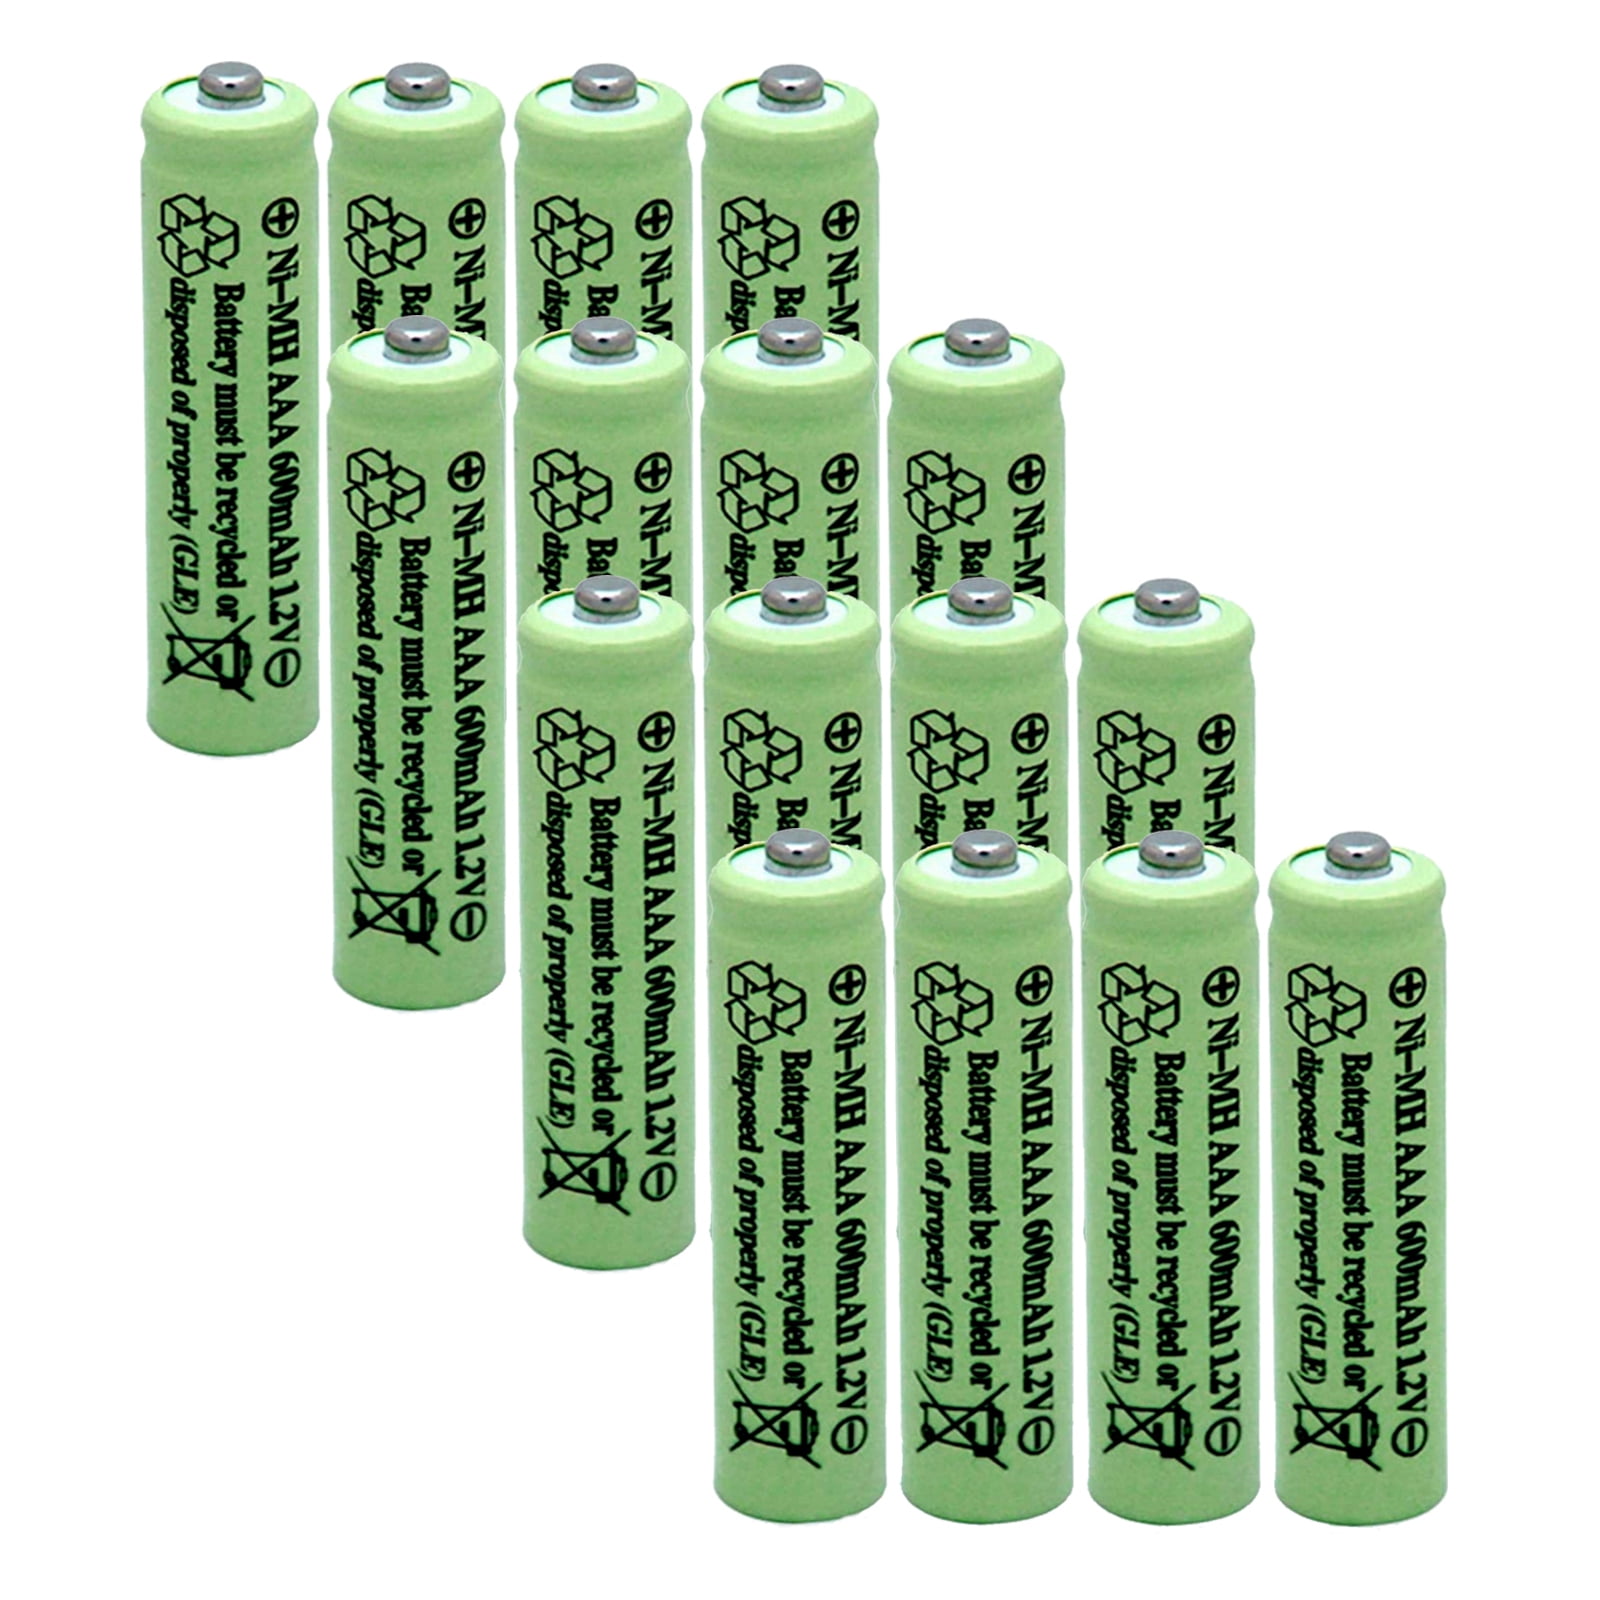 AAA Rechargeable Panasonic eneloop PRO Sliding Box Battery for Size